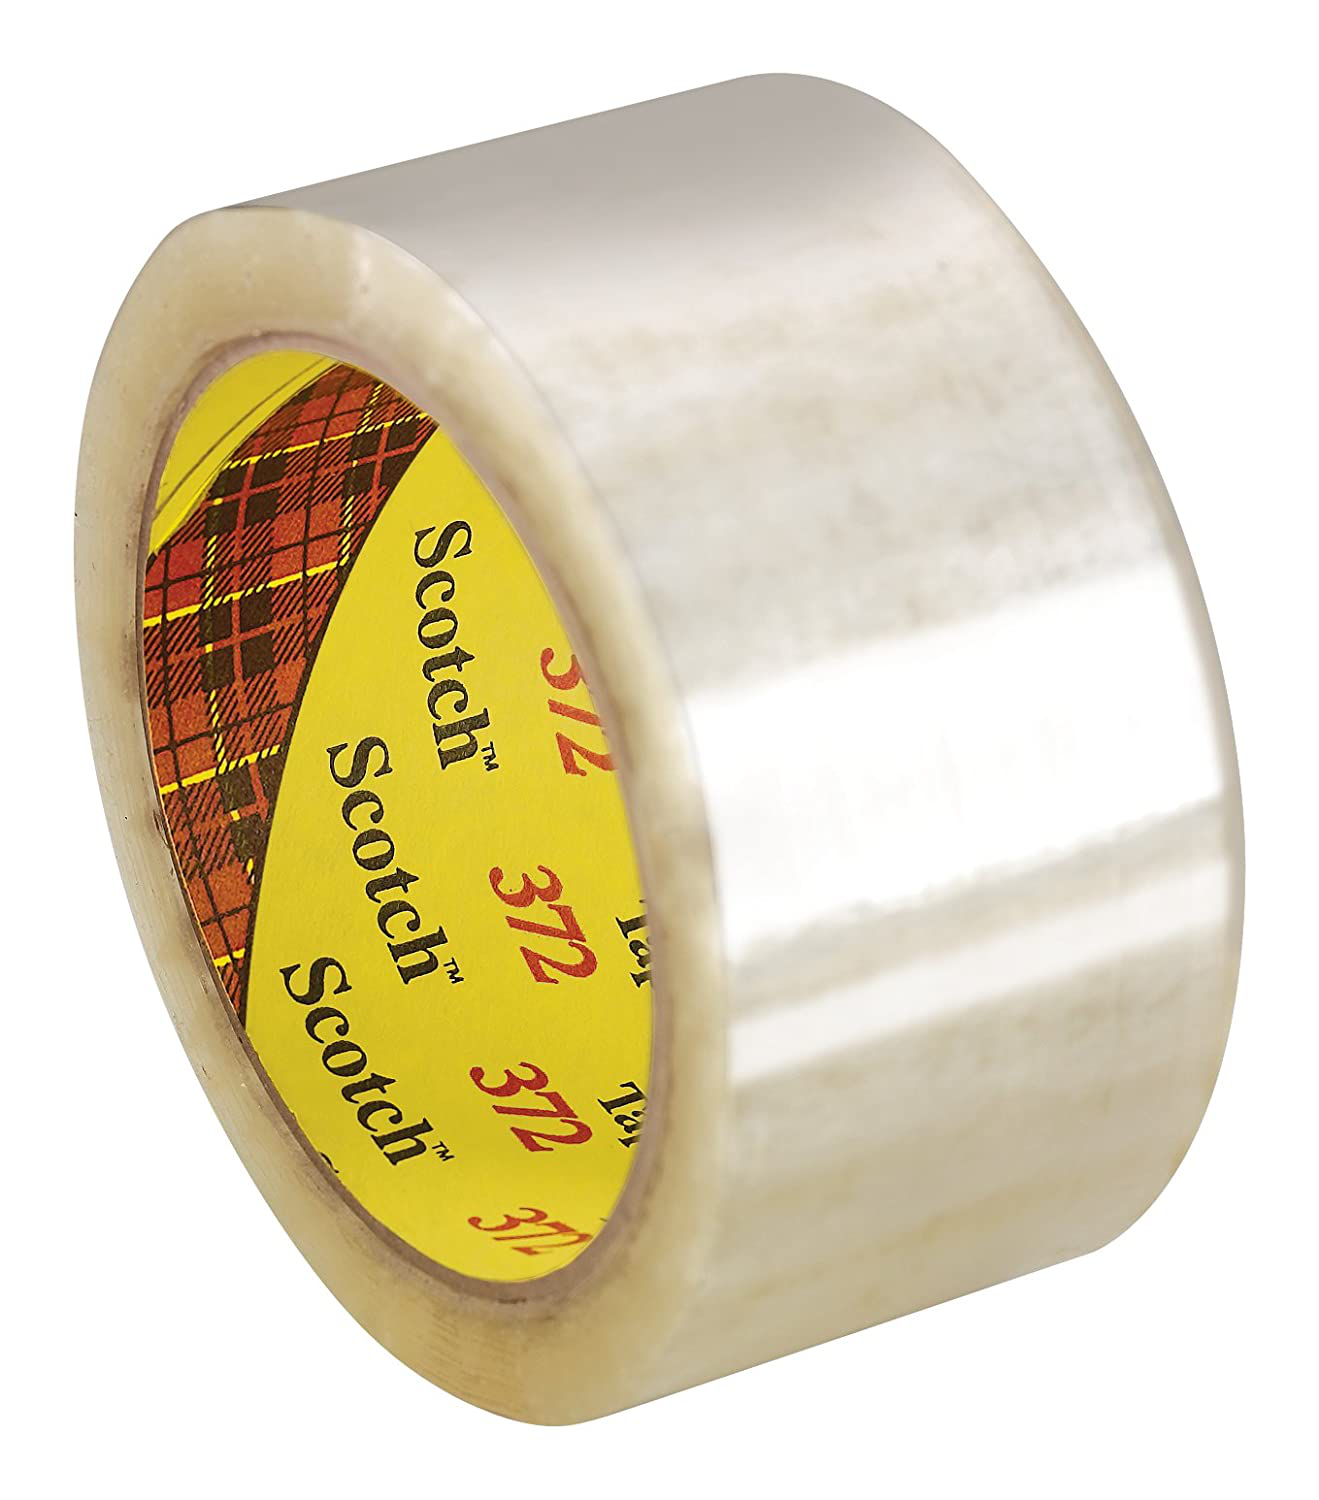 Scotch Box Sealing Tape 372, Clear, 48 mm x 100 m